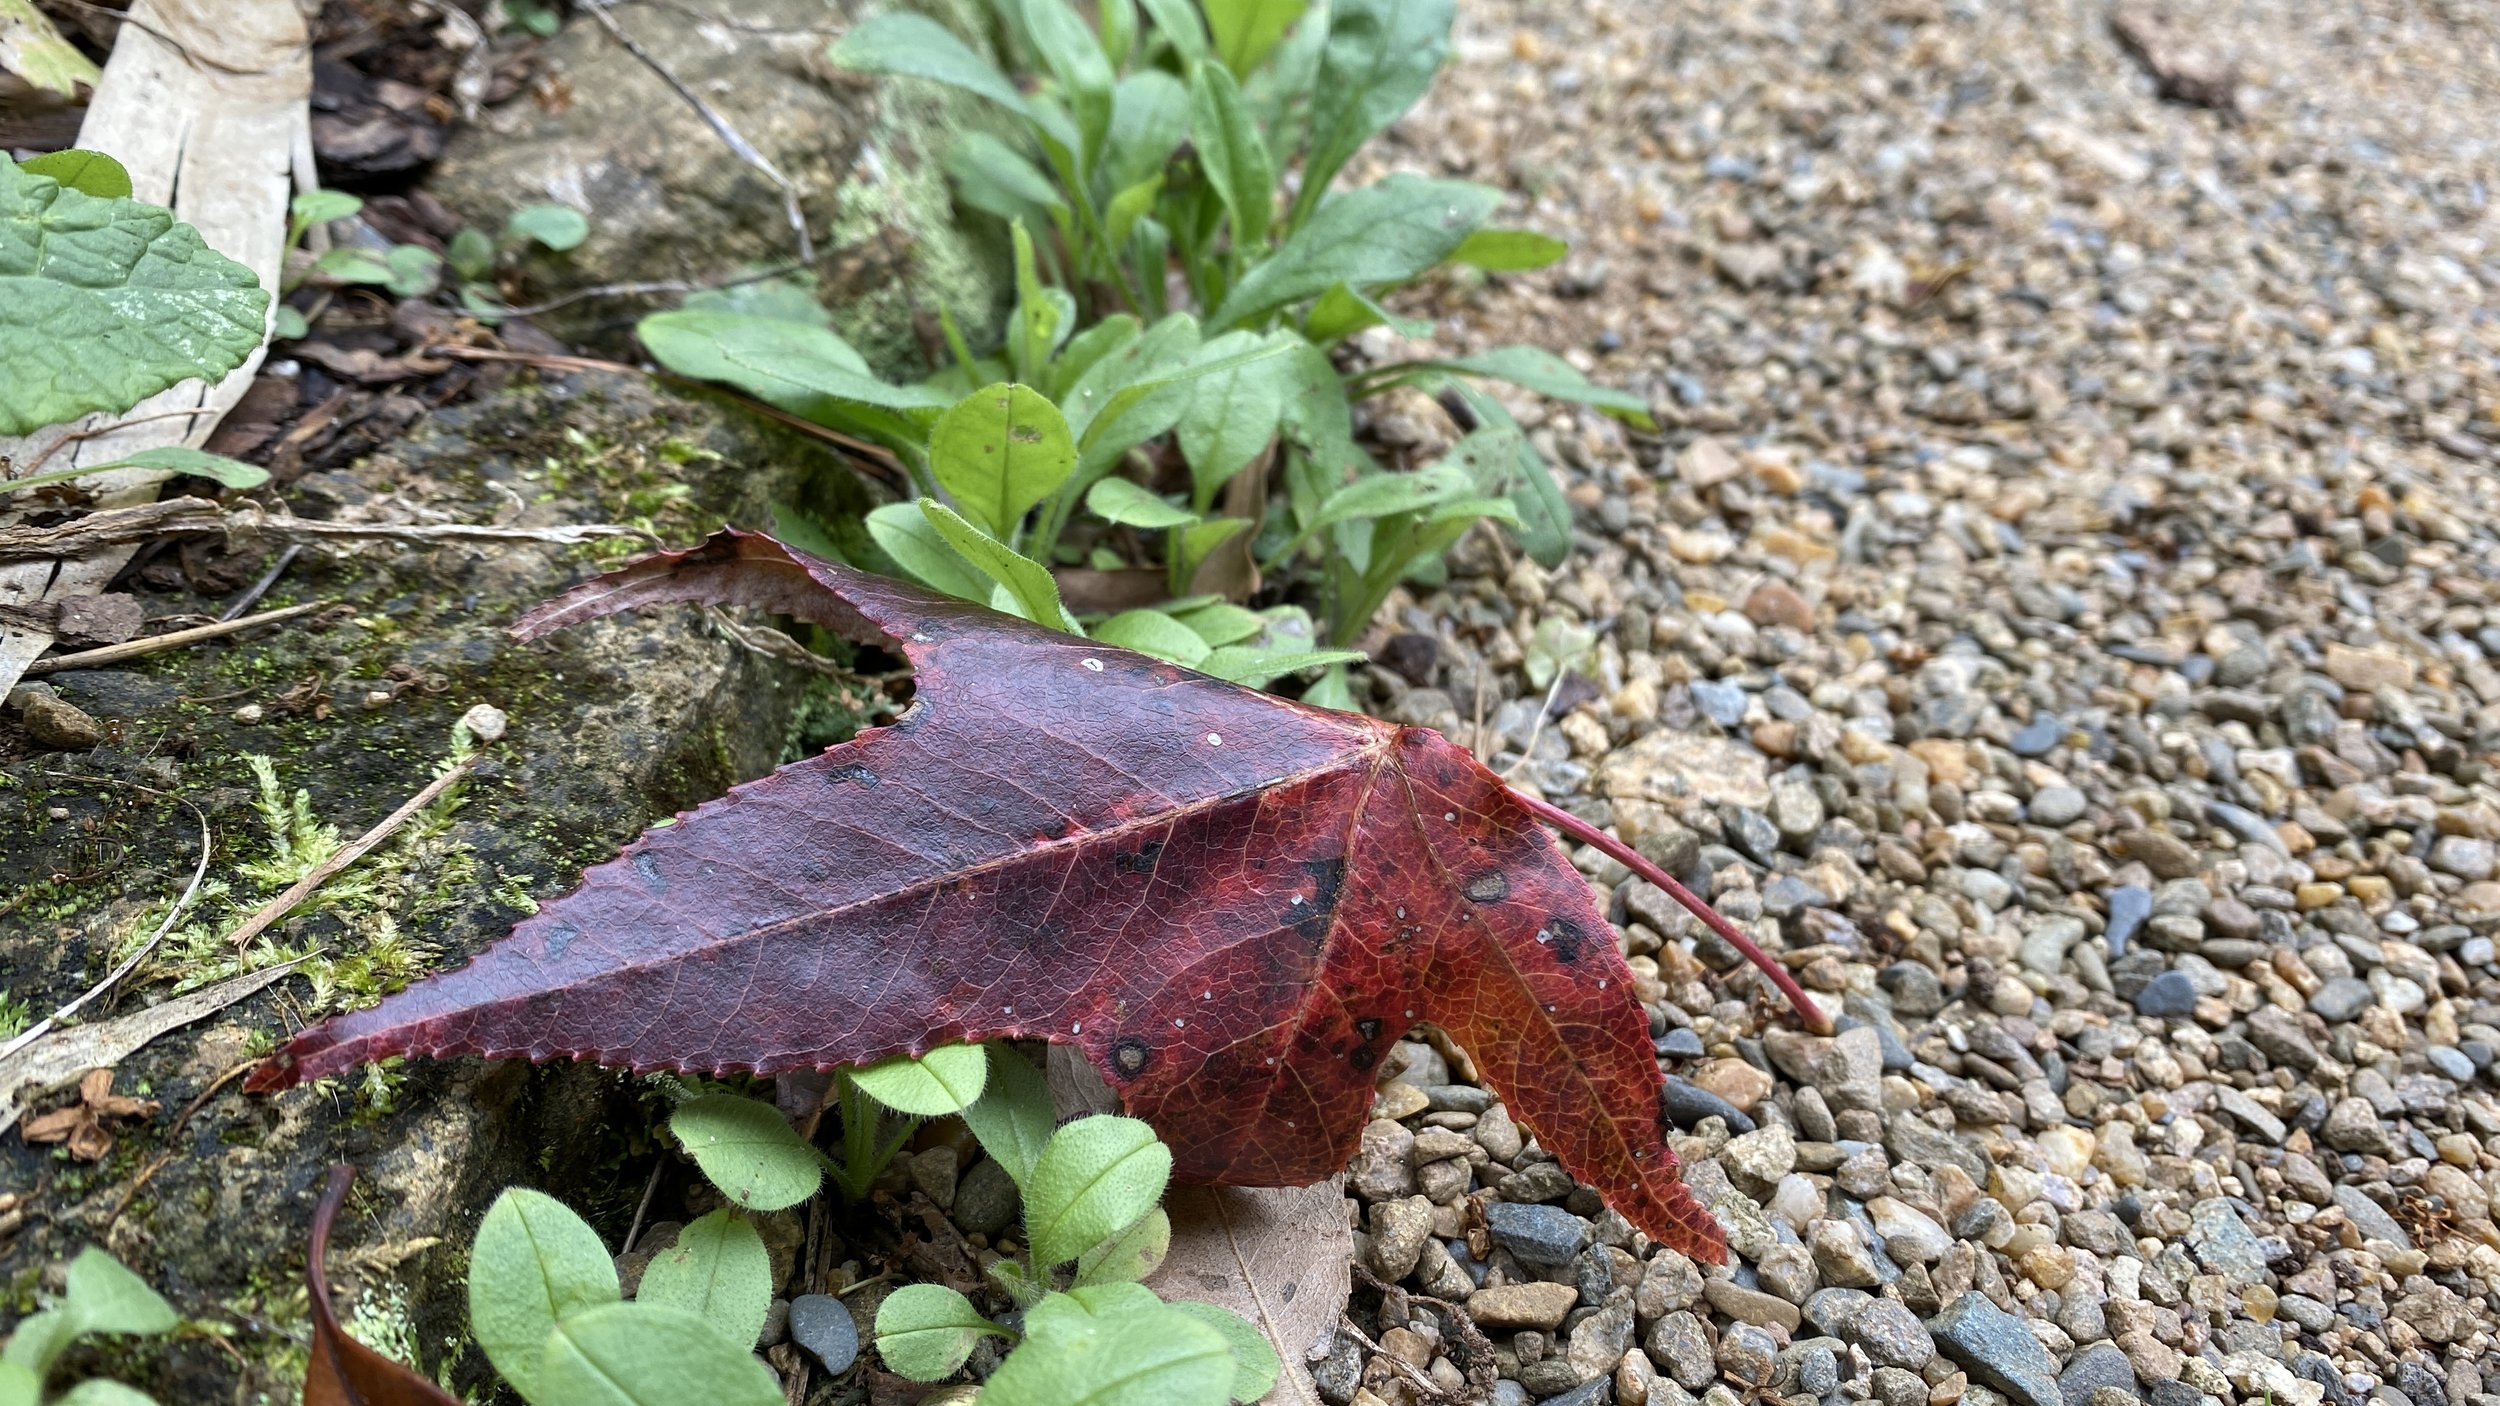  A fallen leaf from the neighbor’s  Liquidambar styraciflua  (American sweetgum) provides dramatic contrast to seedlings of  Myosotis sylvatica  (forget-me-not). 